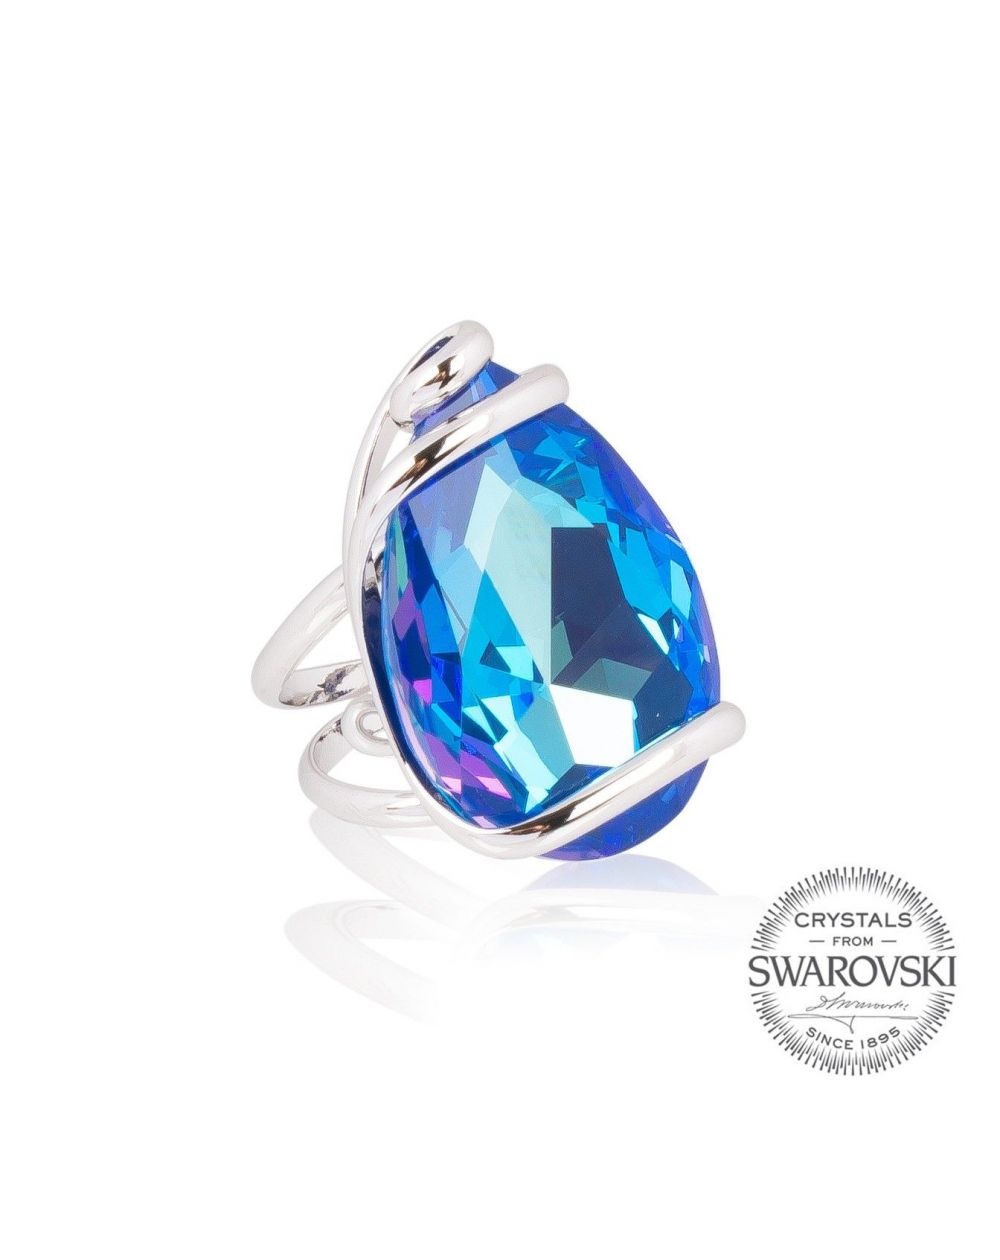 Andrea Marazzini bijoux - Bague cristal Swarovski Blue Delite